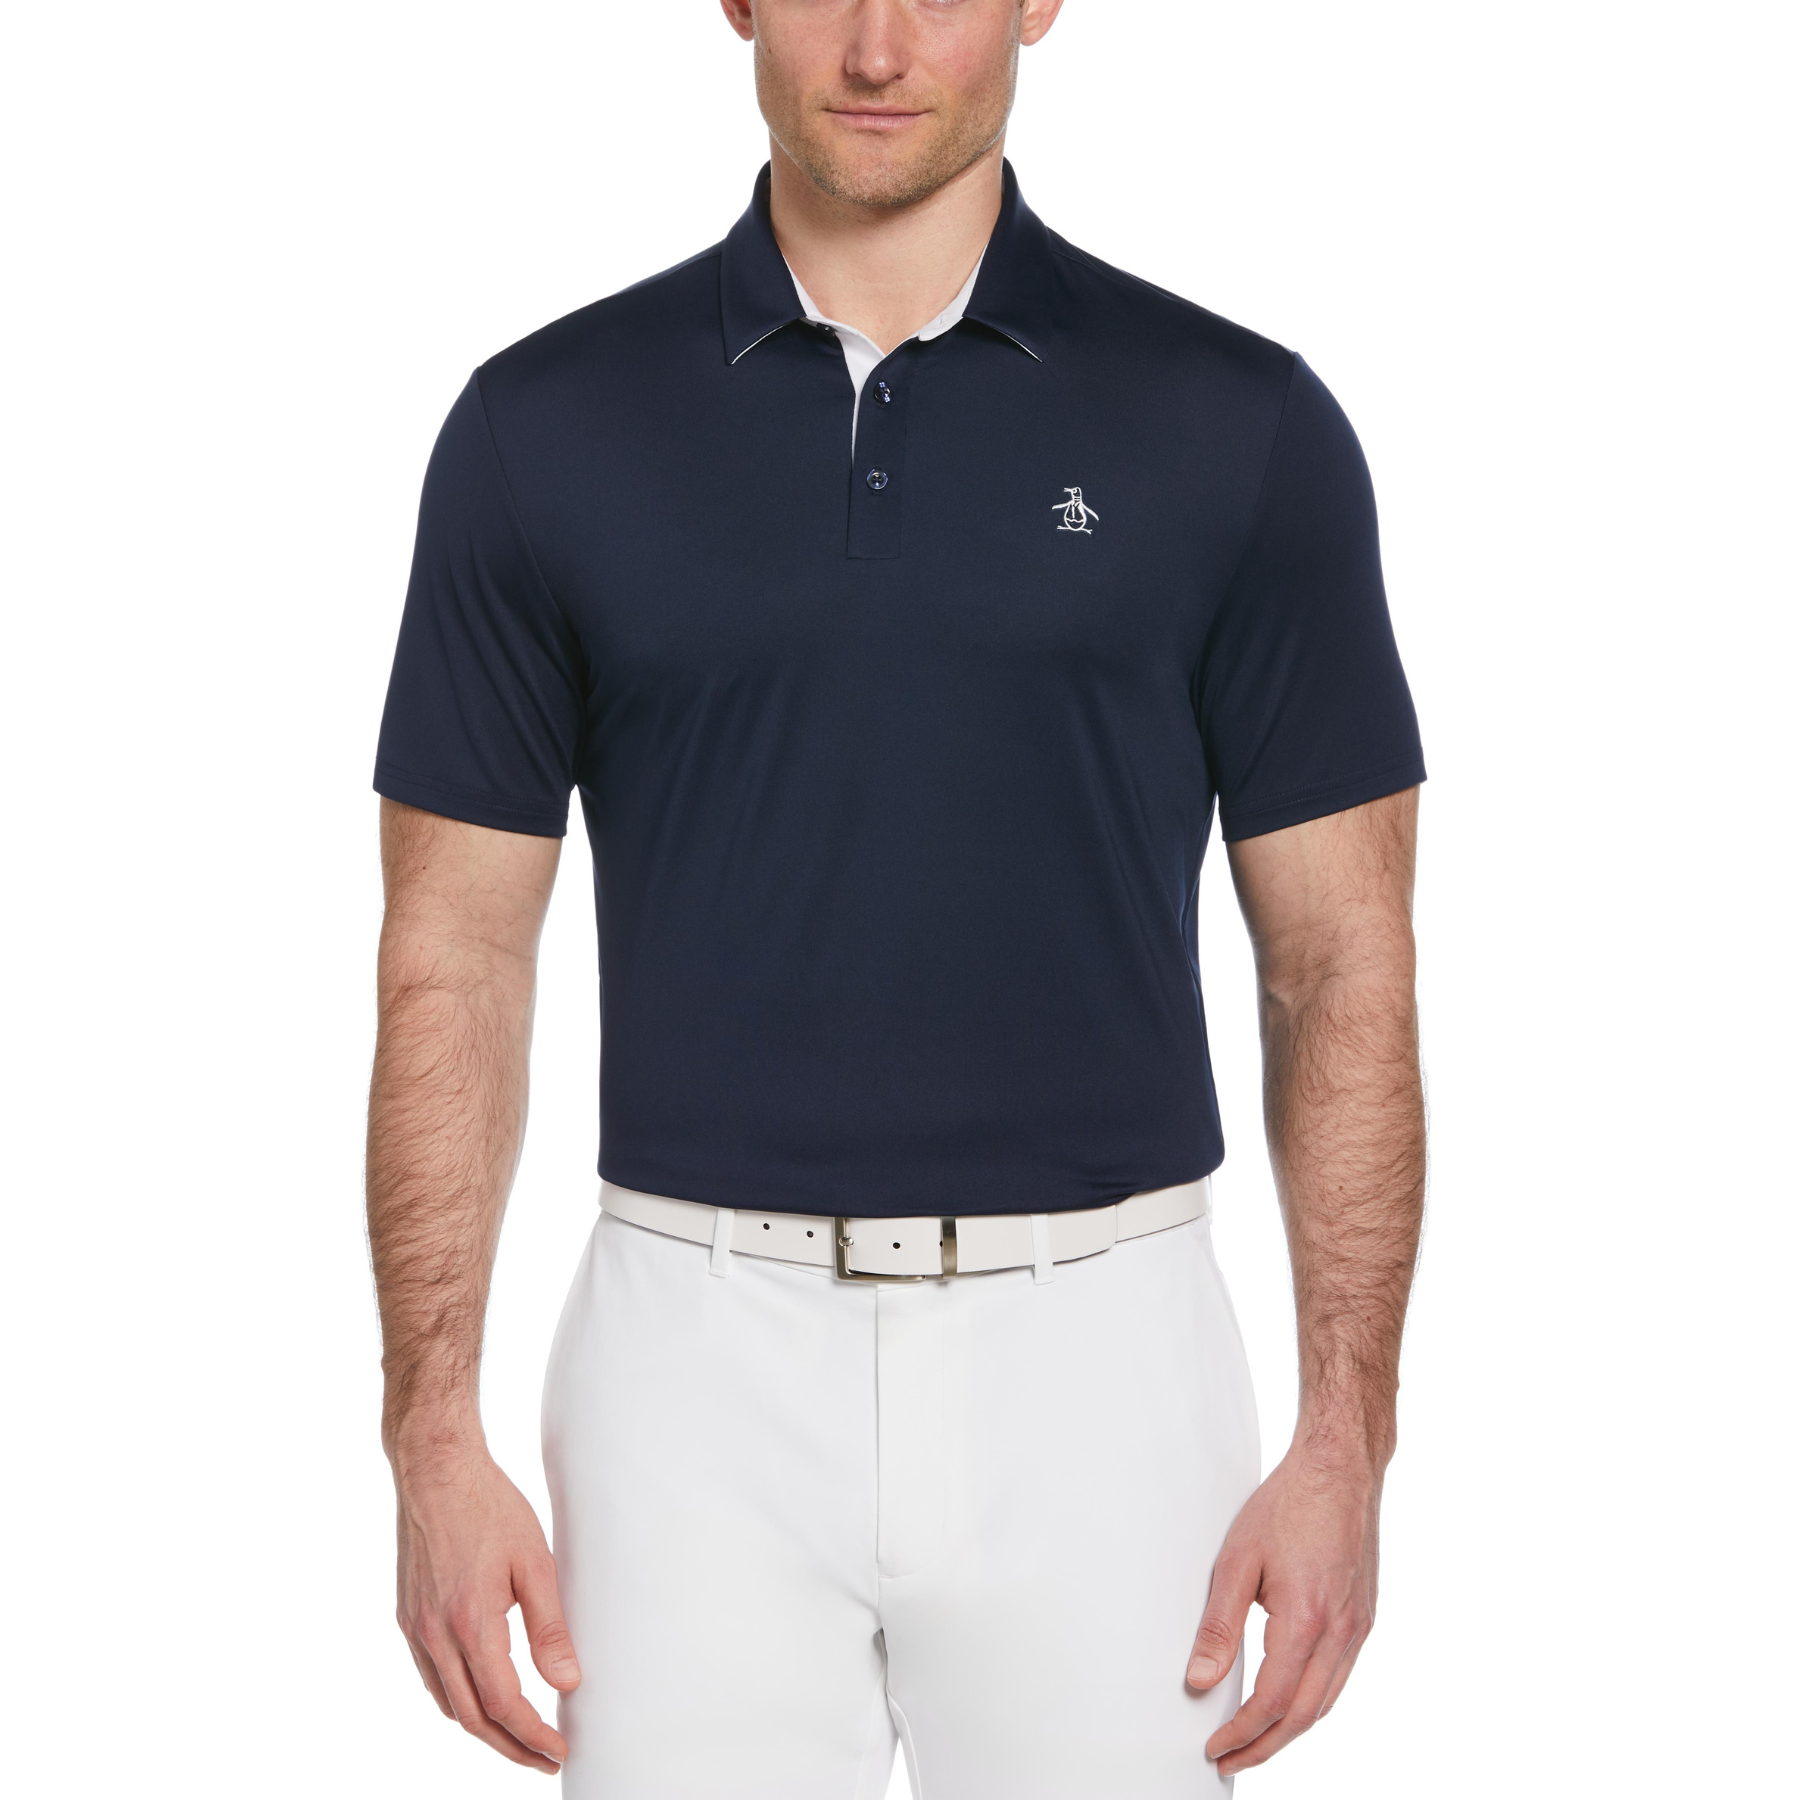 View Original Block Design Short Sleeve Golf Polo Shirt In Black Iris information